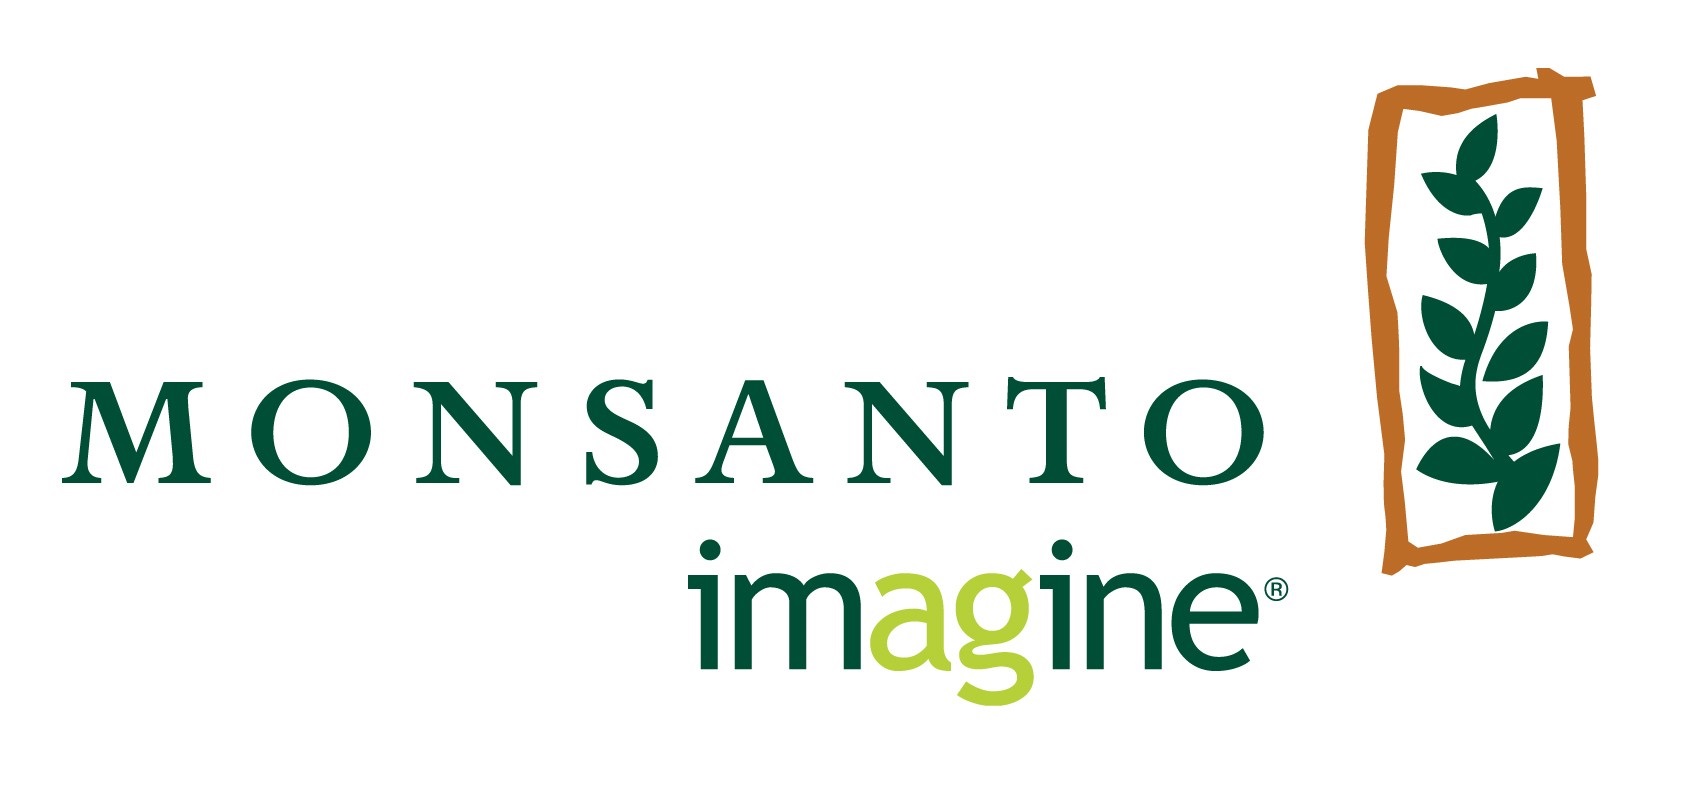 Monsanto_Imagine5000